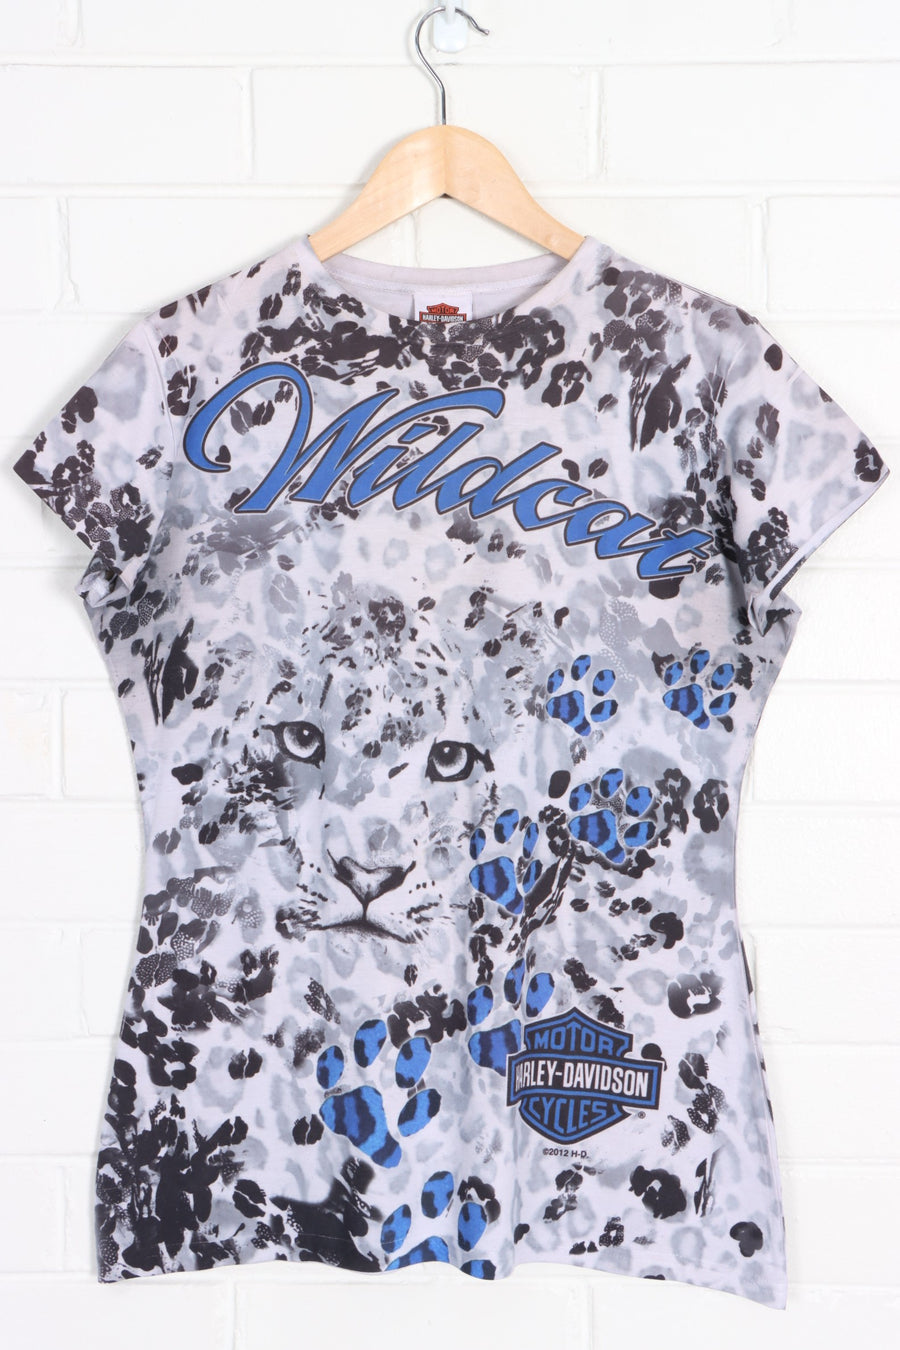 HARLEY DAVIDSON "Wildcat" Leopard Print All Over Cap Sleeve T-Shirt (Women's M)